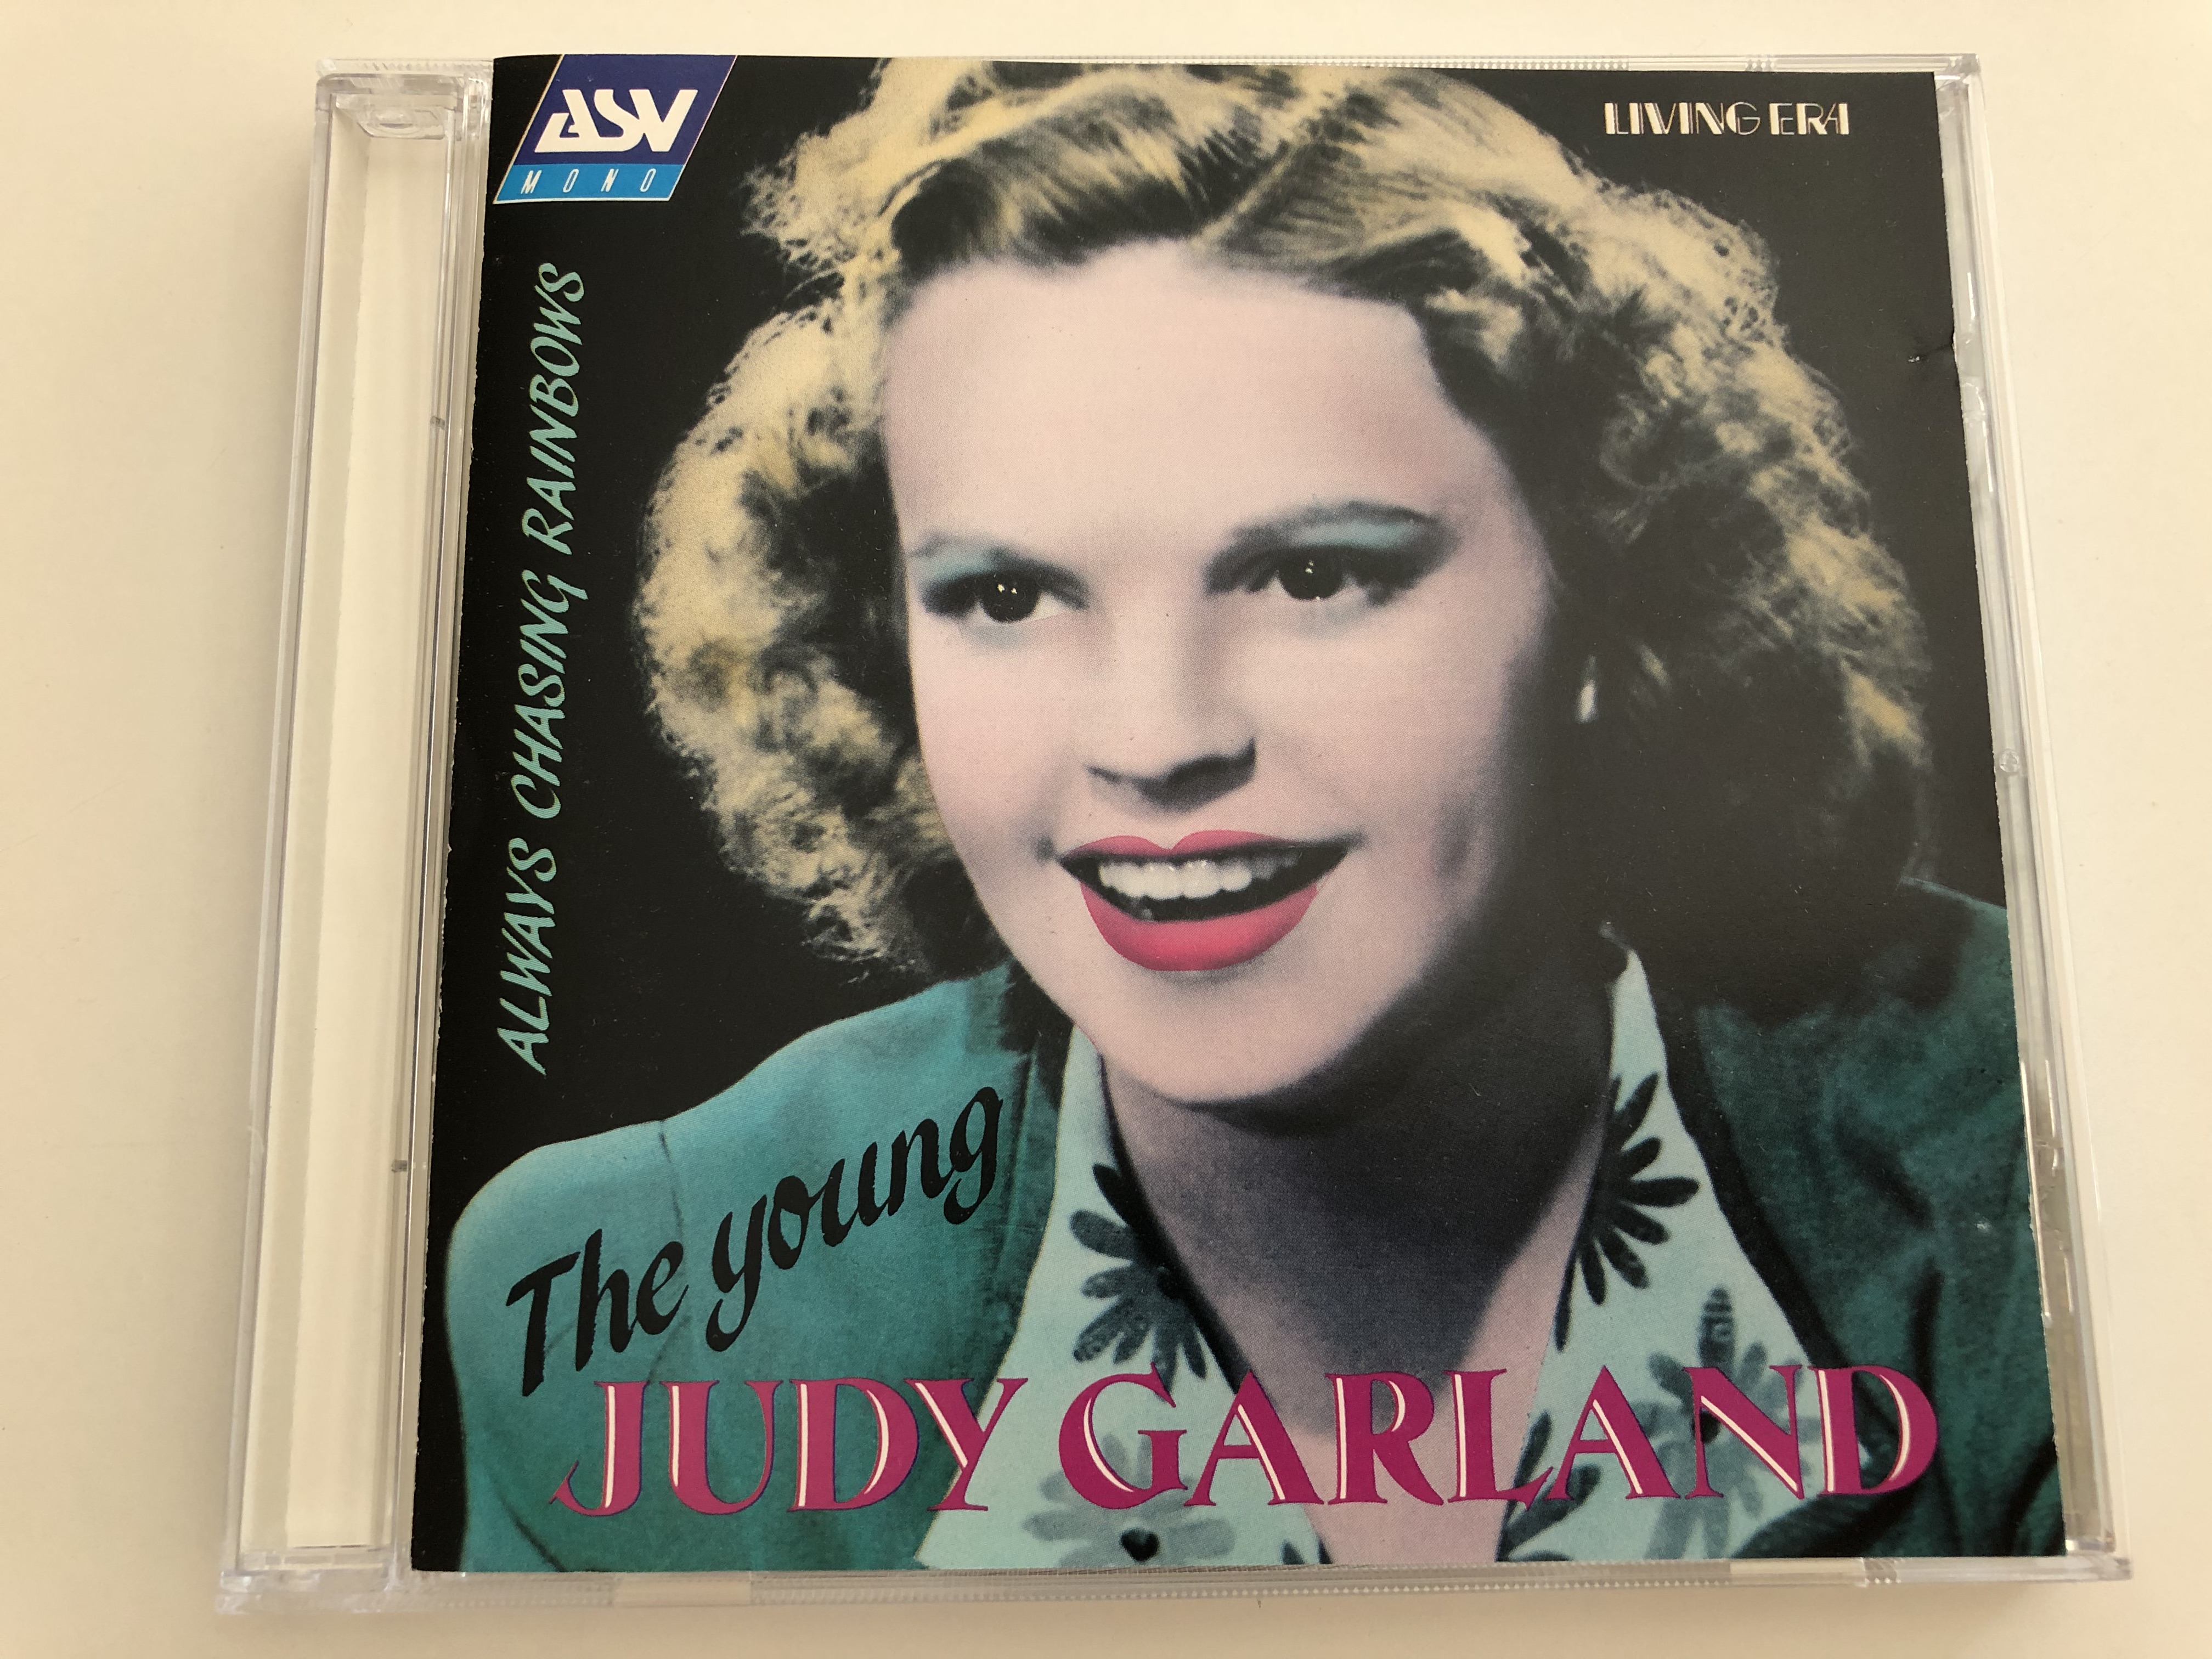 the-young-judy-garland-always-chasing-rainbows-audio-cd-1992-living-era-original-mono-recordings-from-1936-1941-cd-aja-5093-1-.jpg